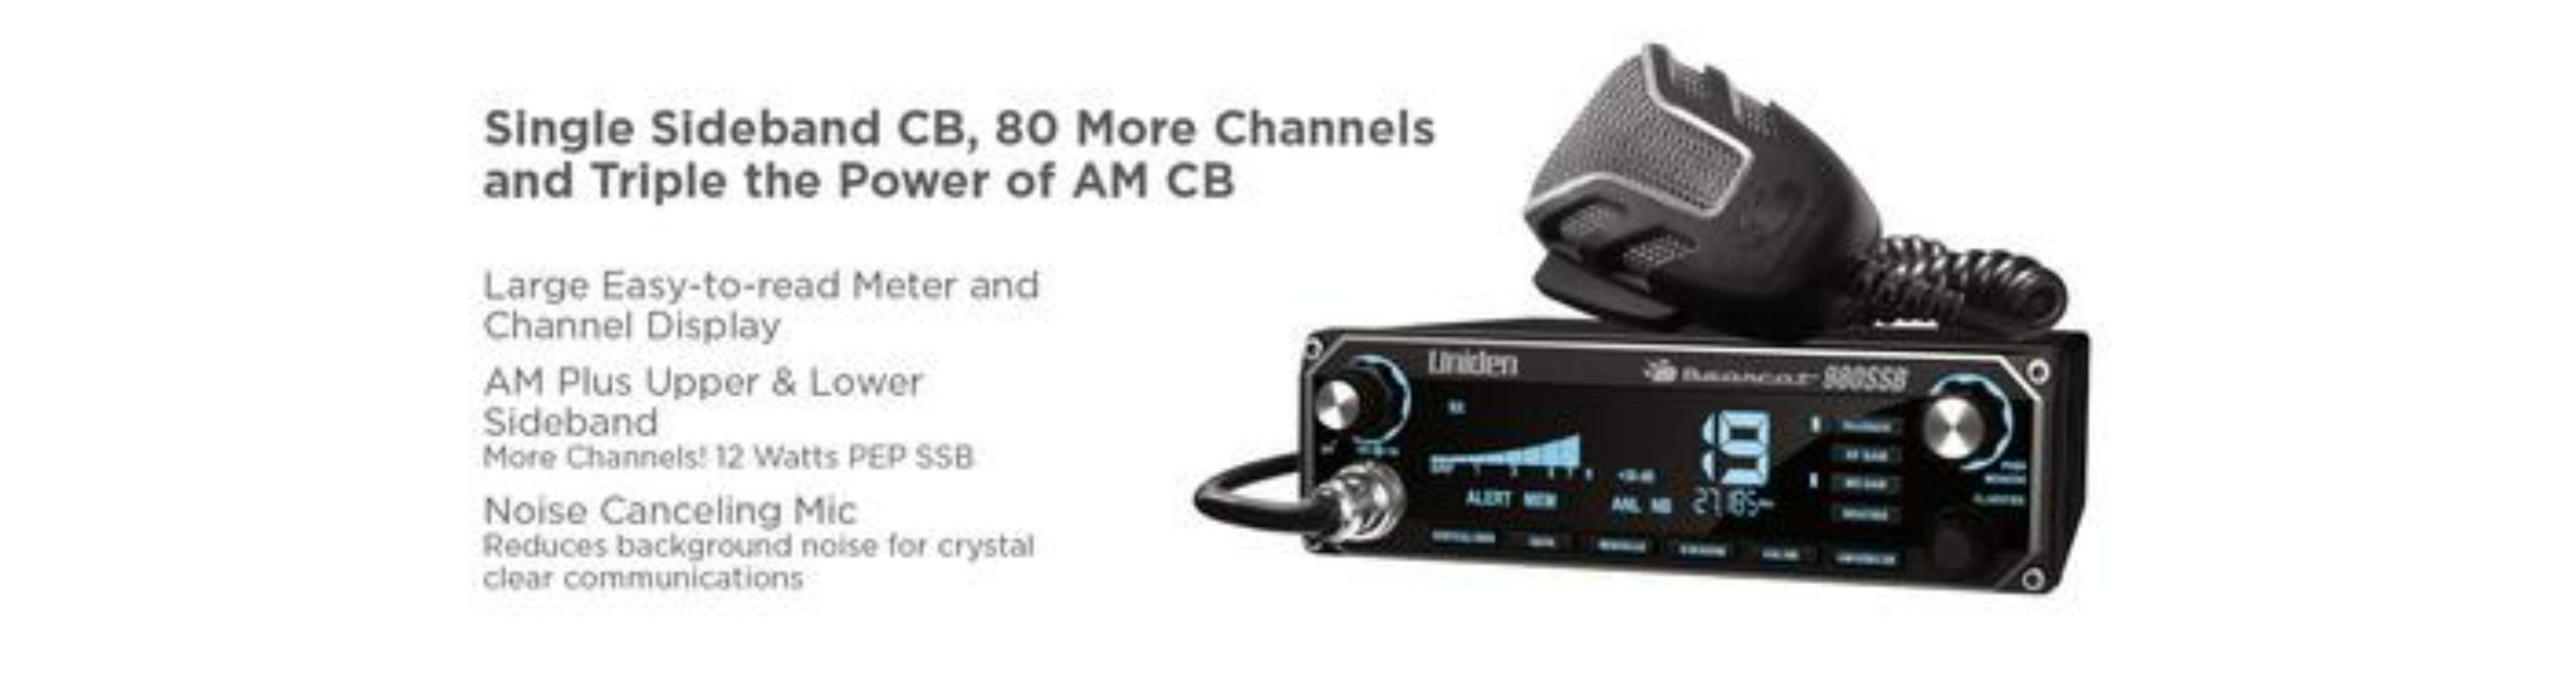 3 40 channel SSB CB radio with 7 color display BEARCAT980 cb radio uniden